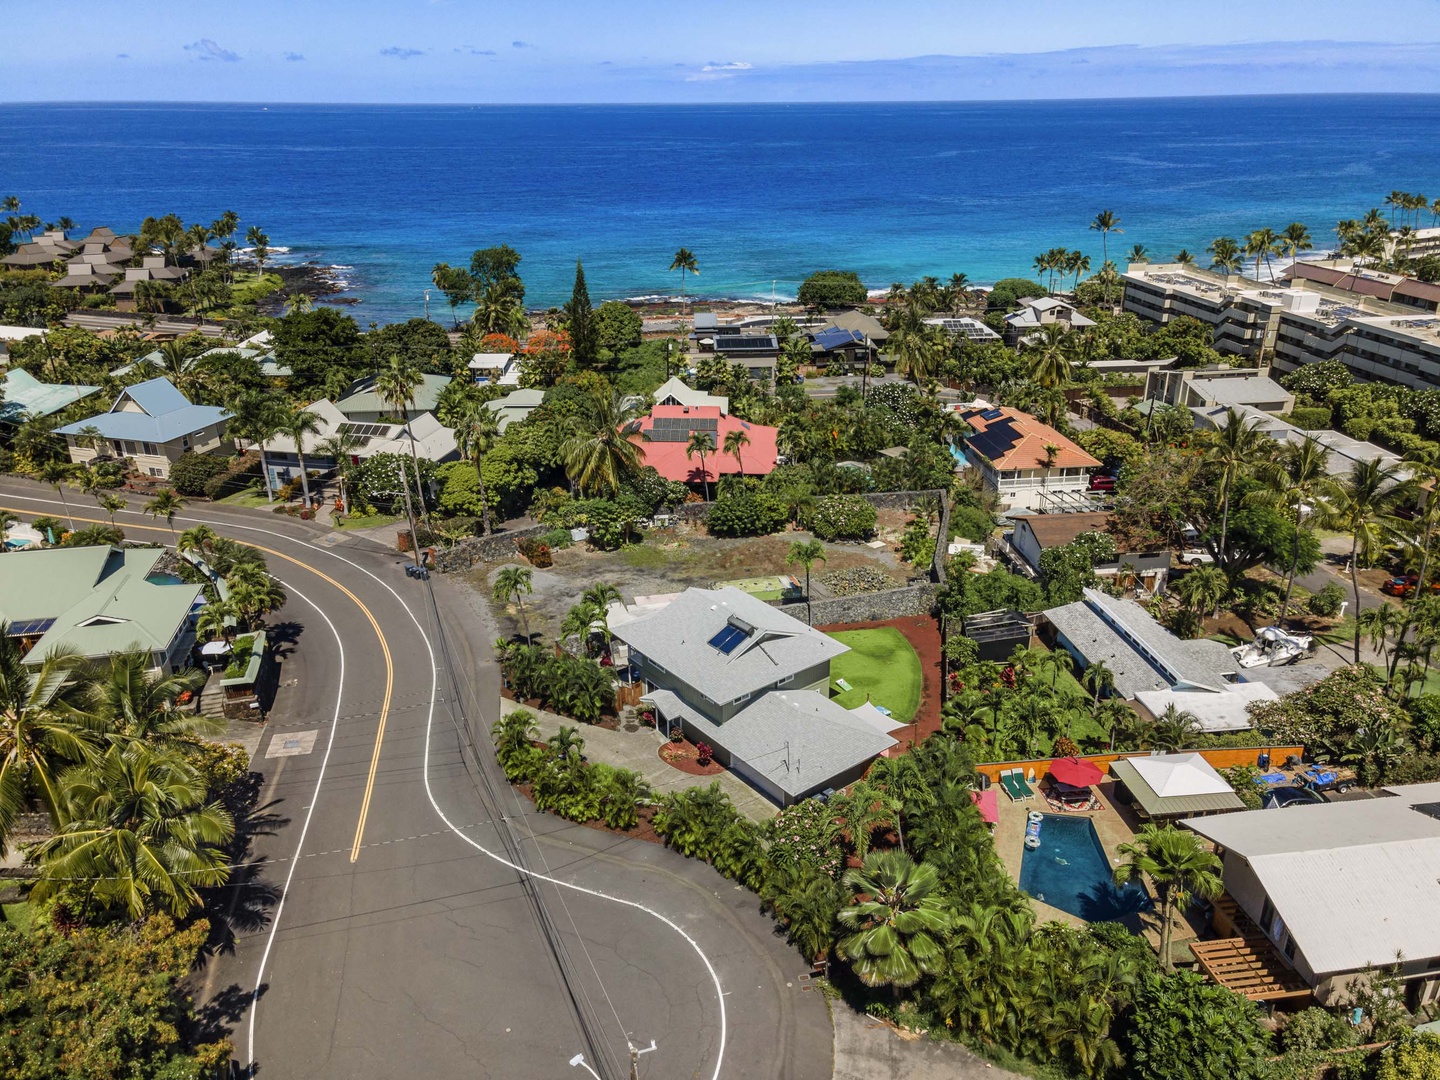 Kailua Kona Vacation Rentals, Hale A Kai - Property located in a cul-de sac less than 5 minutes from Magic Sands Beach!